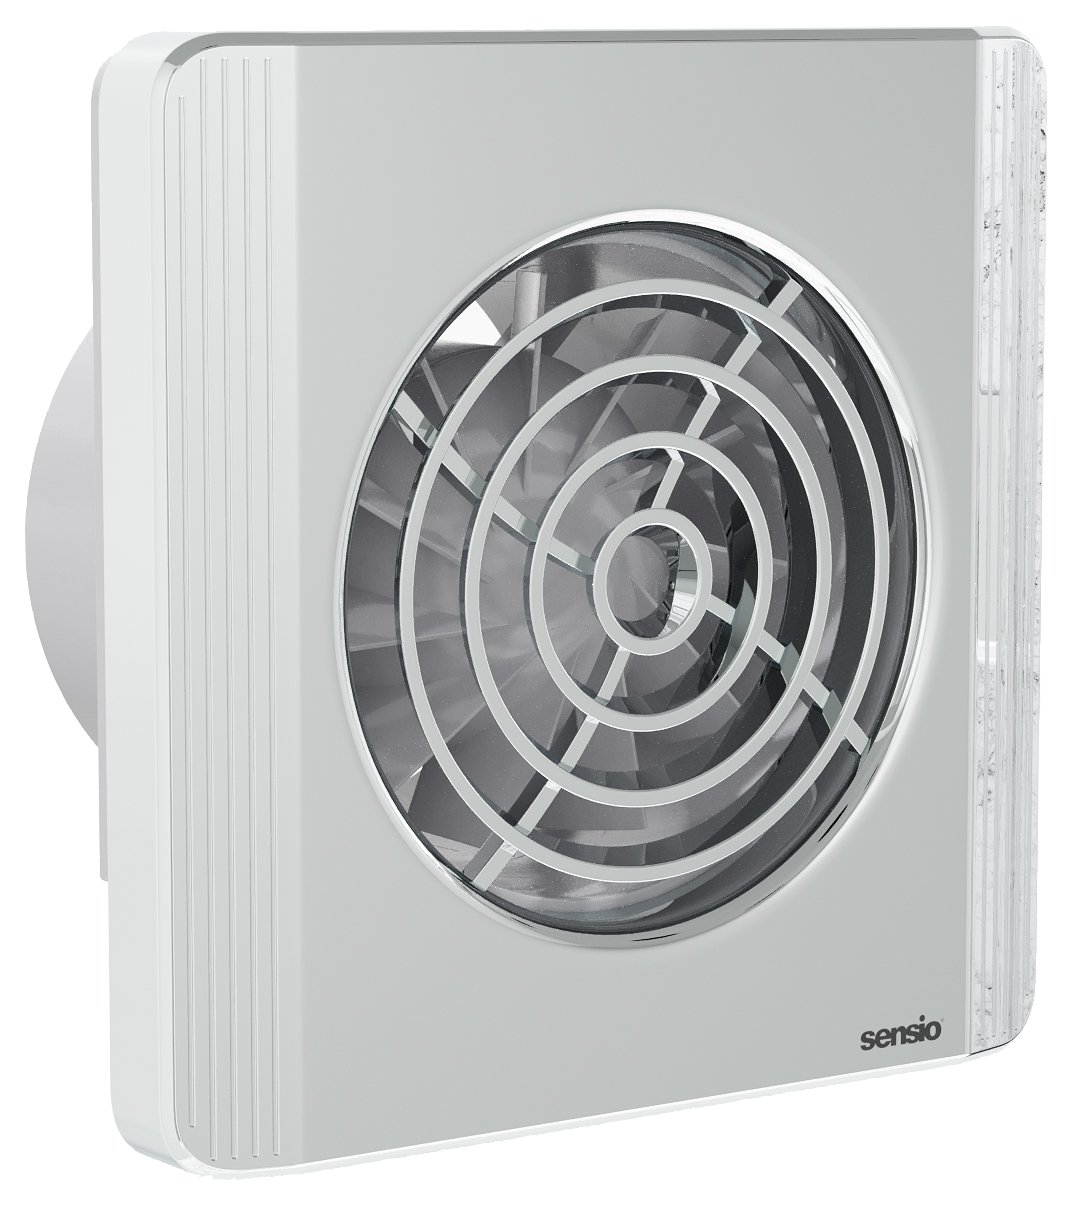 Sensio Layci Chrome Wall Ventilation Fan with Aquilo Ventilation Ducting Kit - 100mm